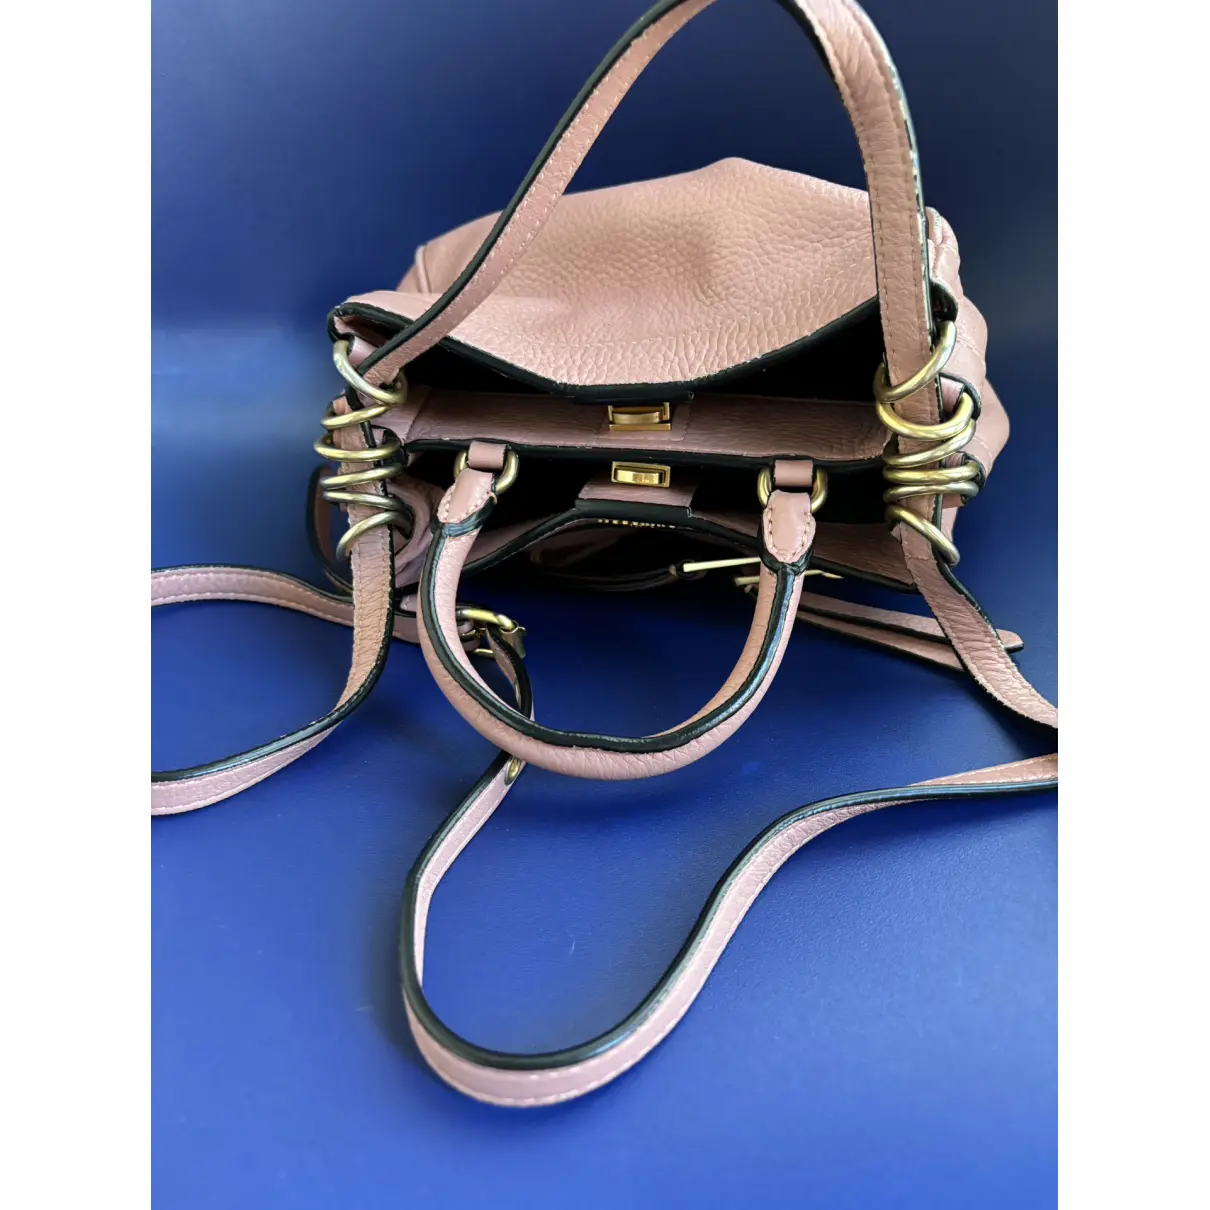 Buy Moschino Biker leather handbag online